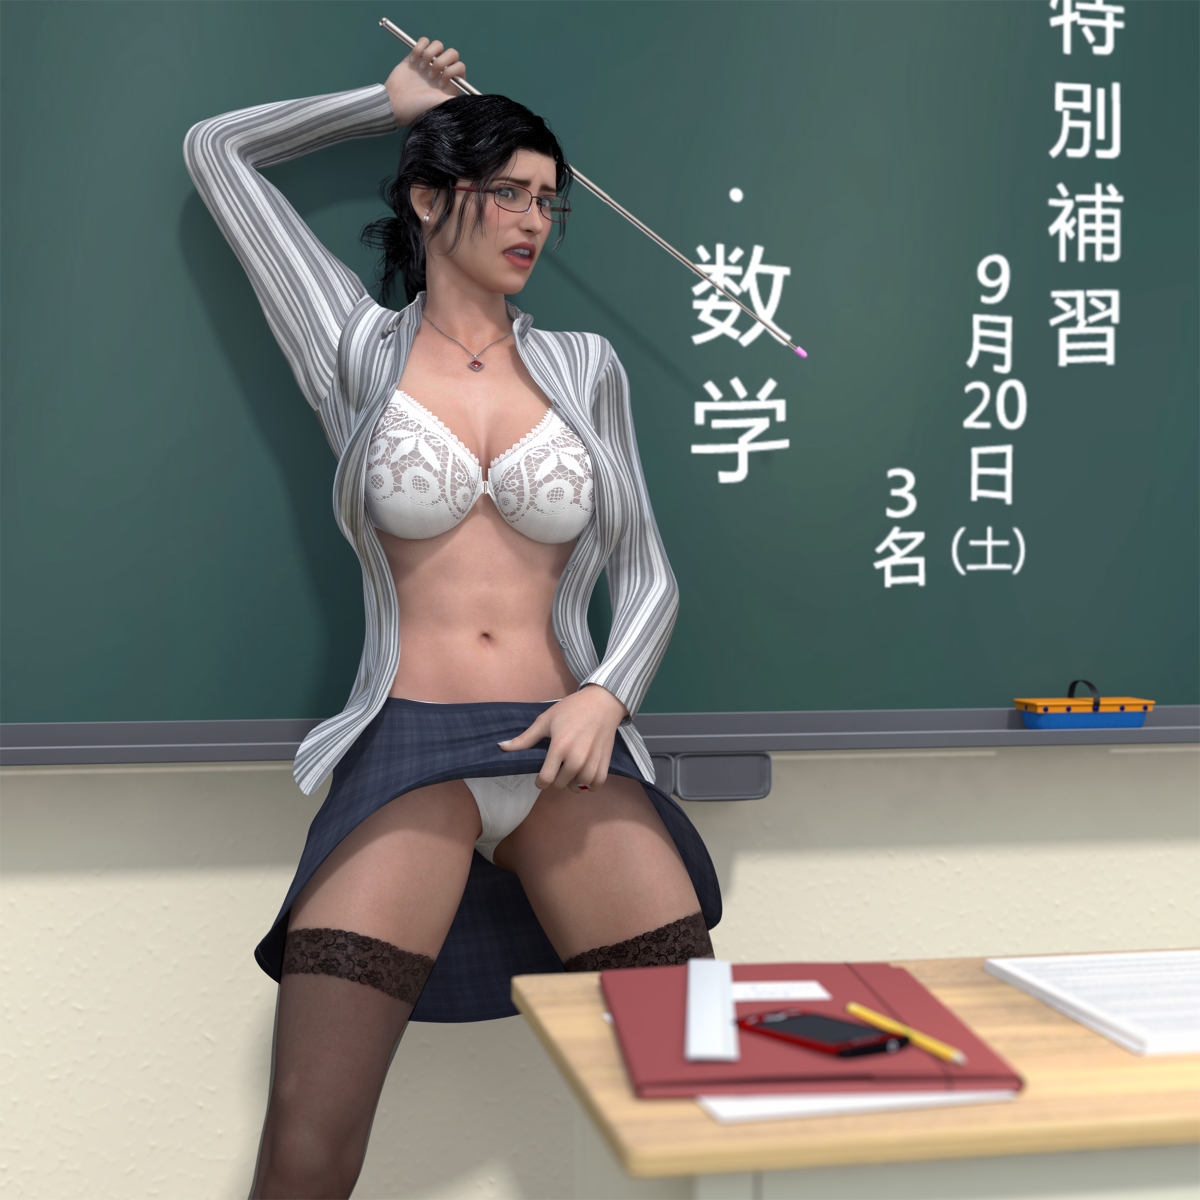 Porn Comics - Hiromi Female Teacher 1 porn comics 8 muses